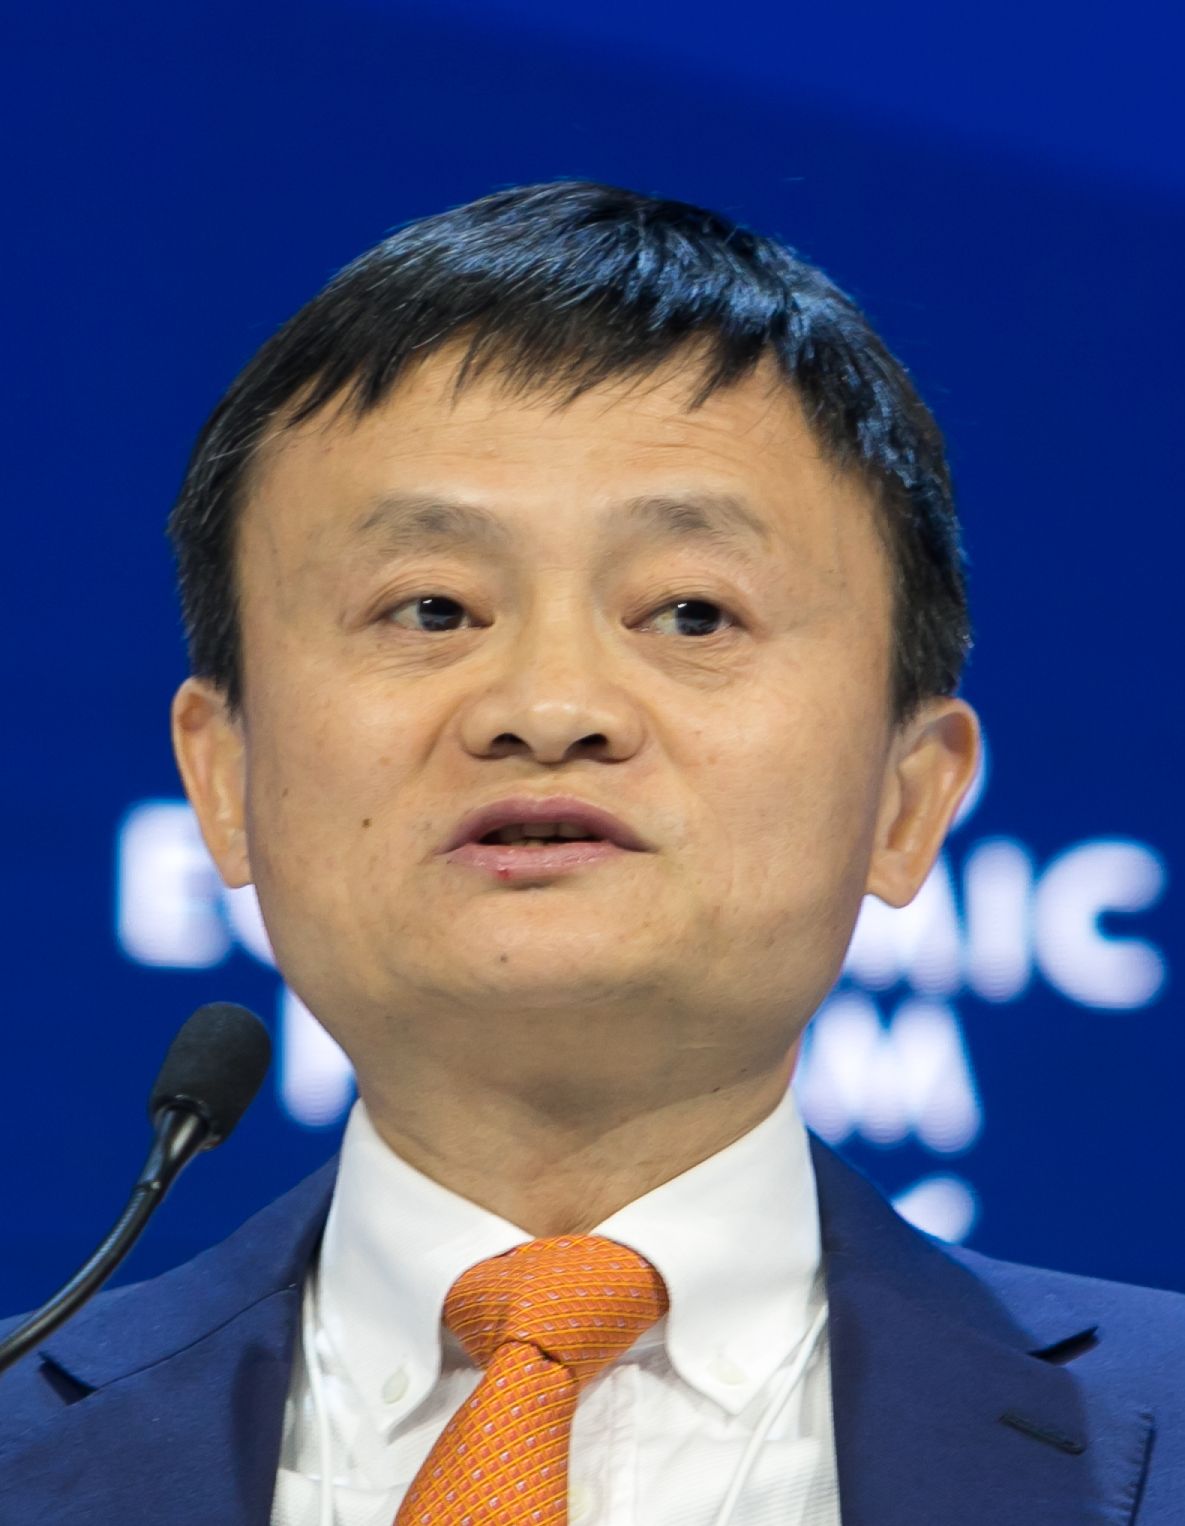 Alibaba's founder, Jack Ma.